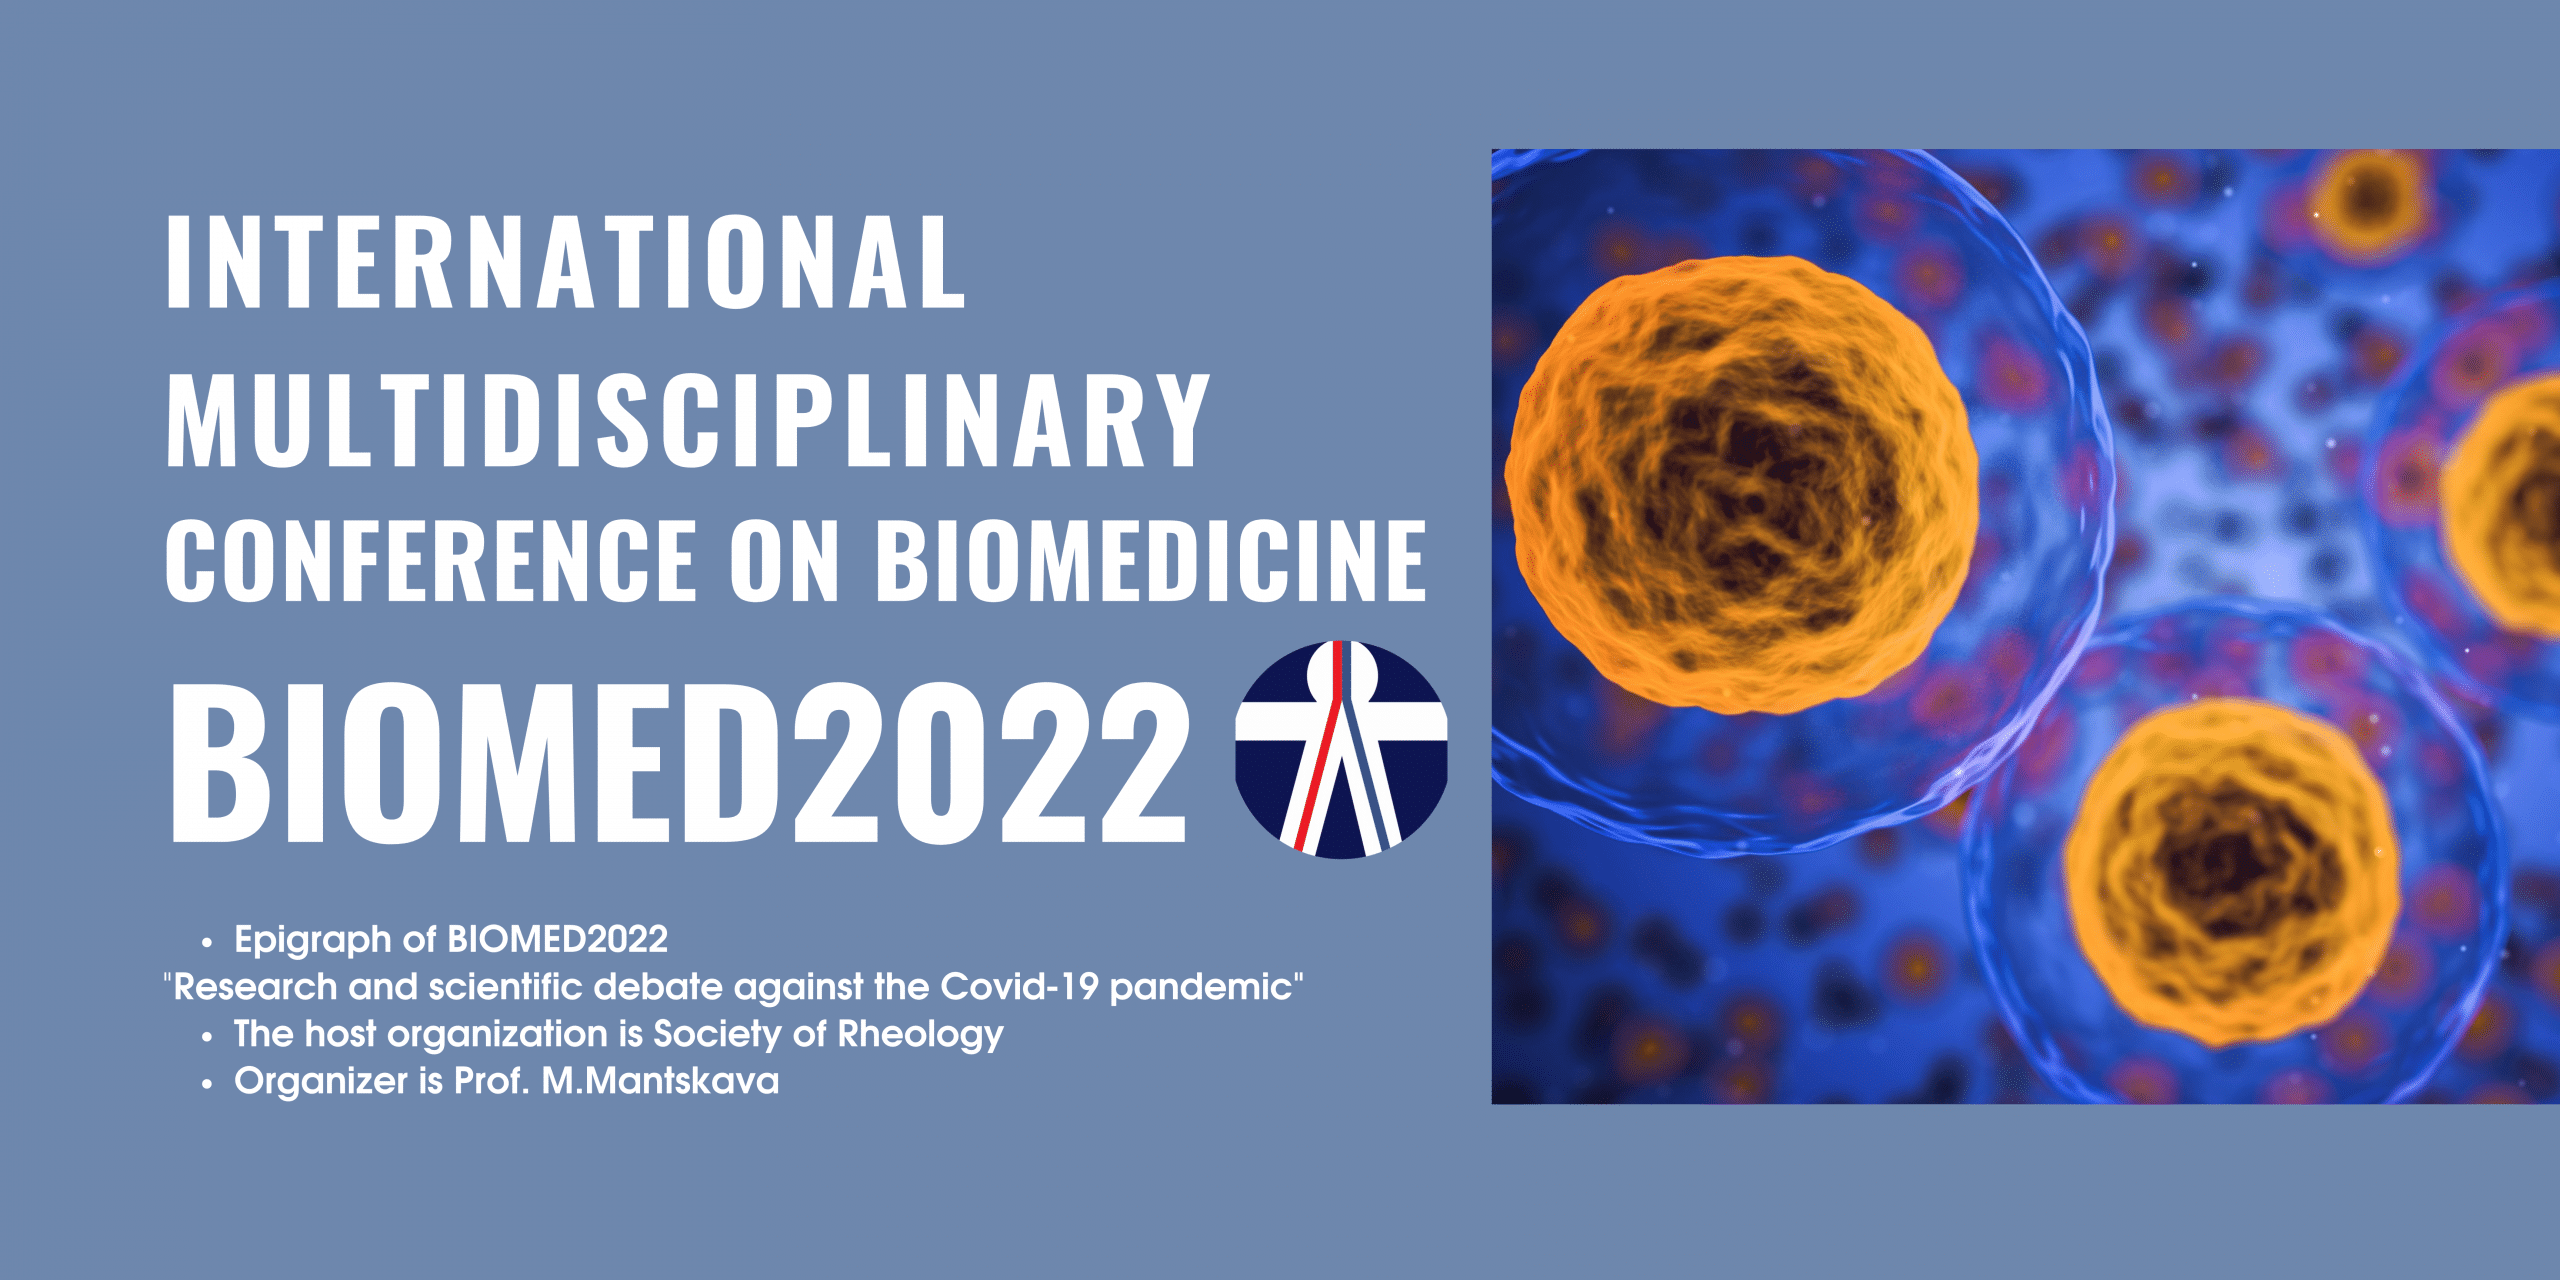 International Multidisciplinary Conference on Biomedicine BIOMED2022